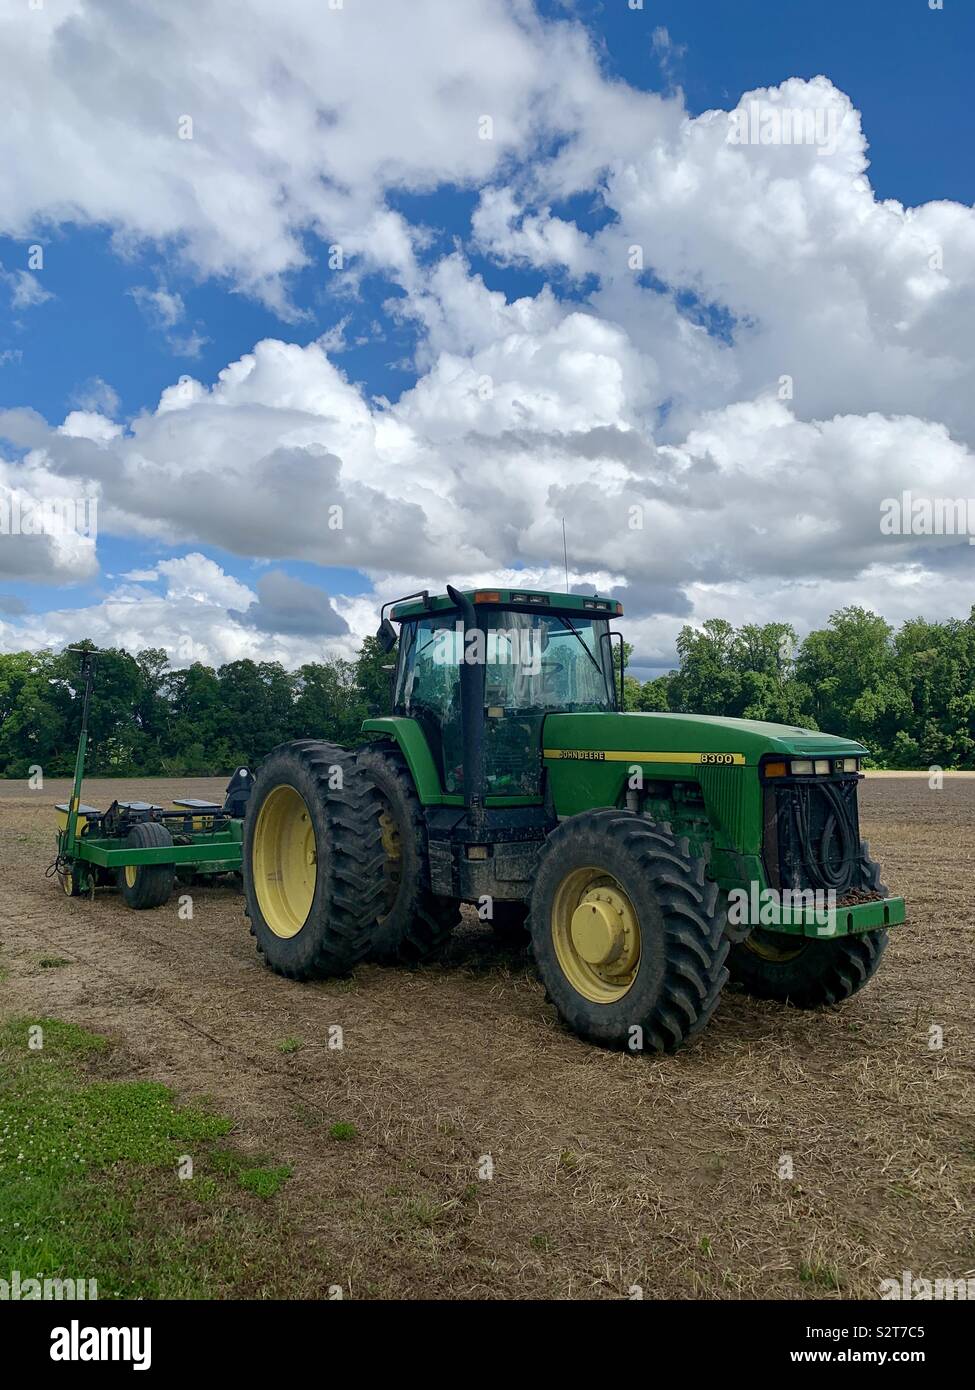 Big John Deere Tractor Pulling Planter On Maryland Farm Stock Photo Alamy